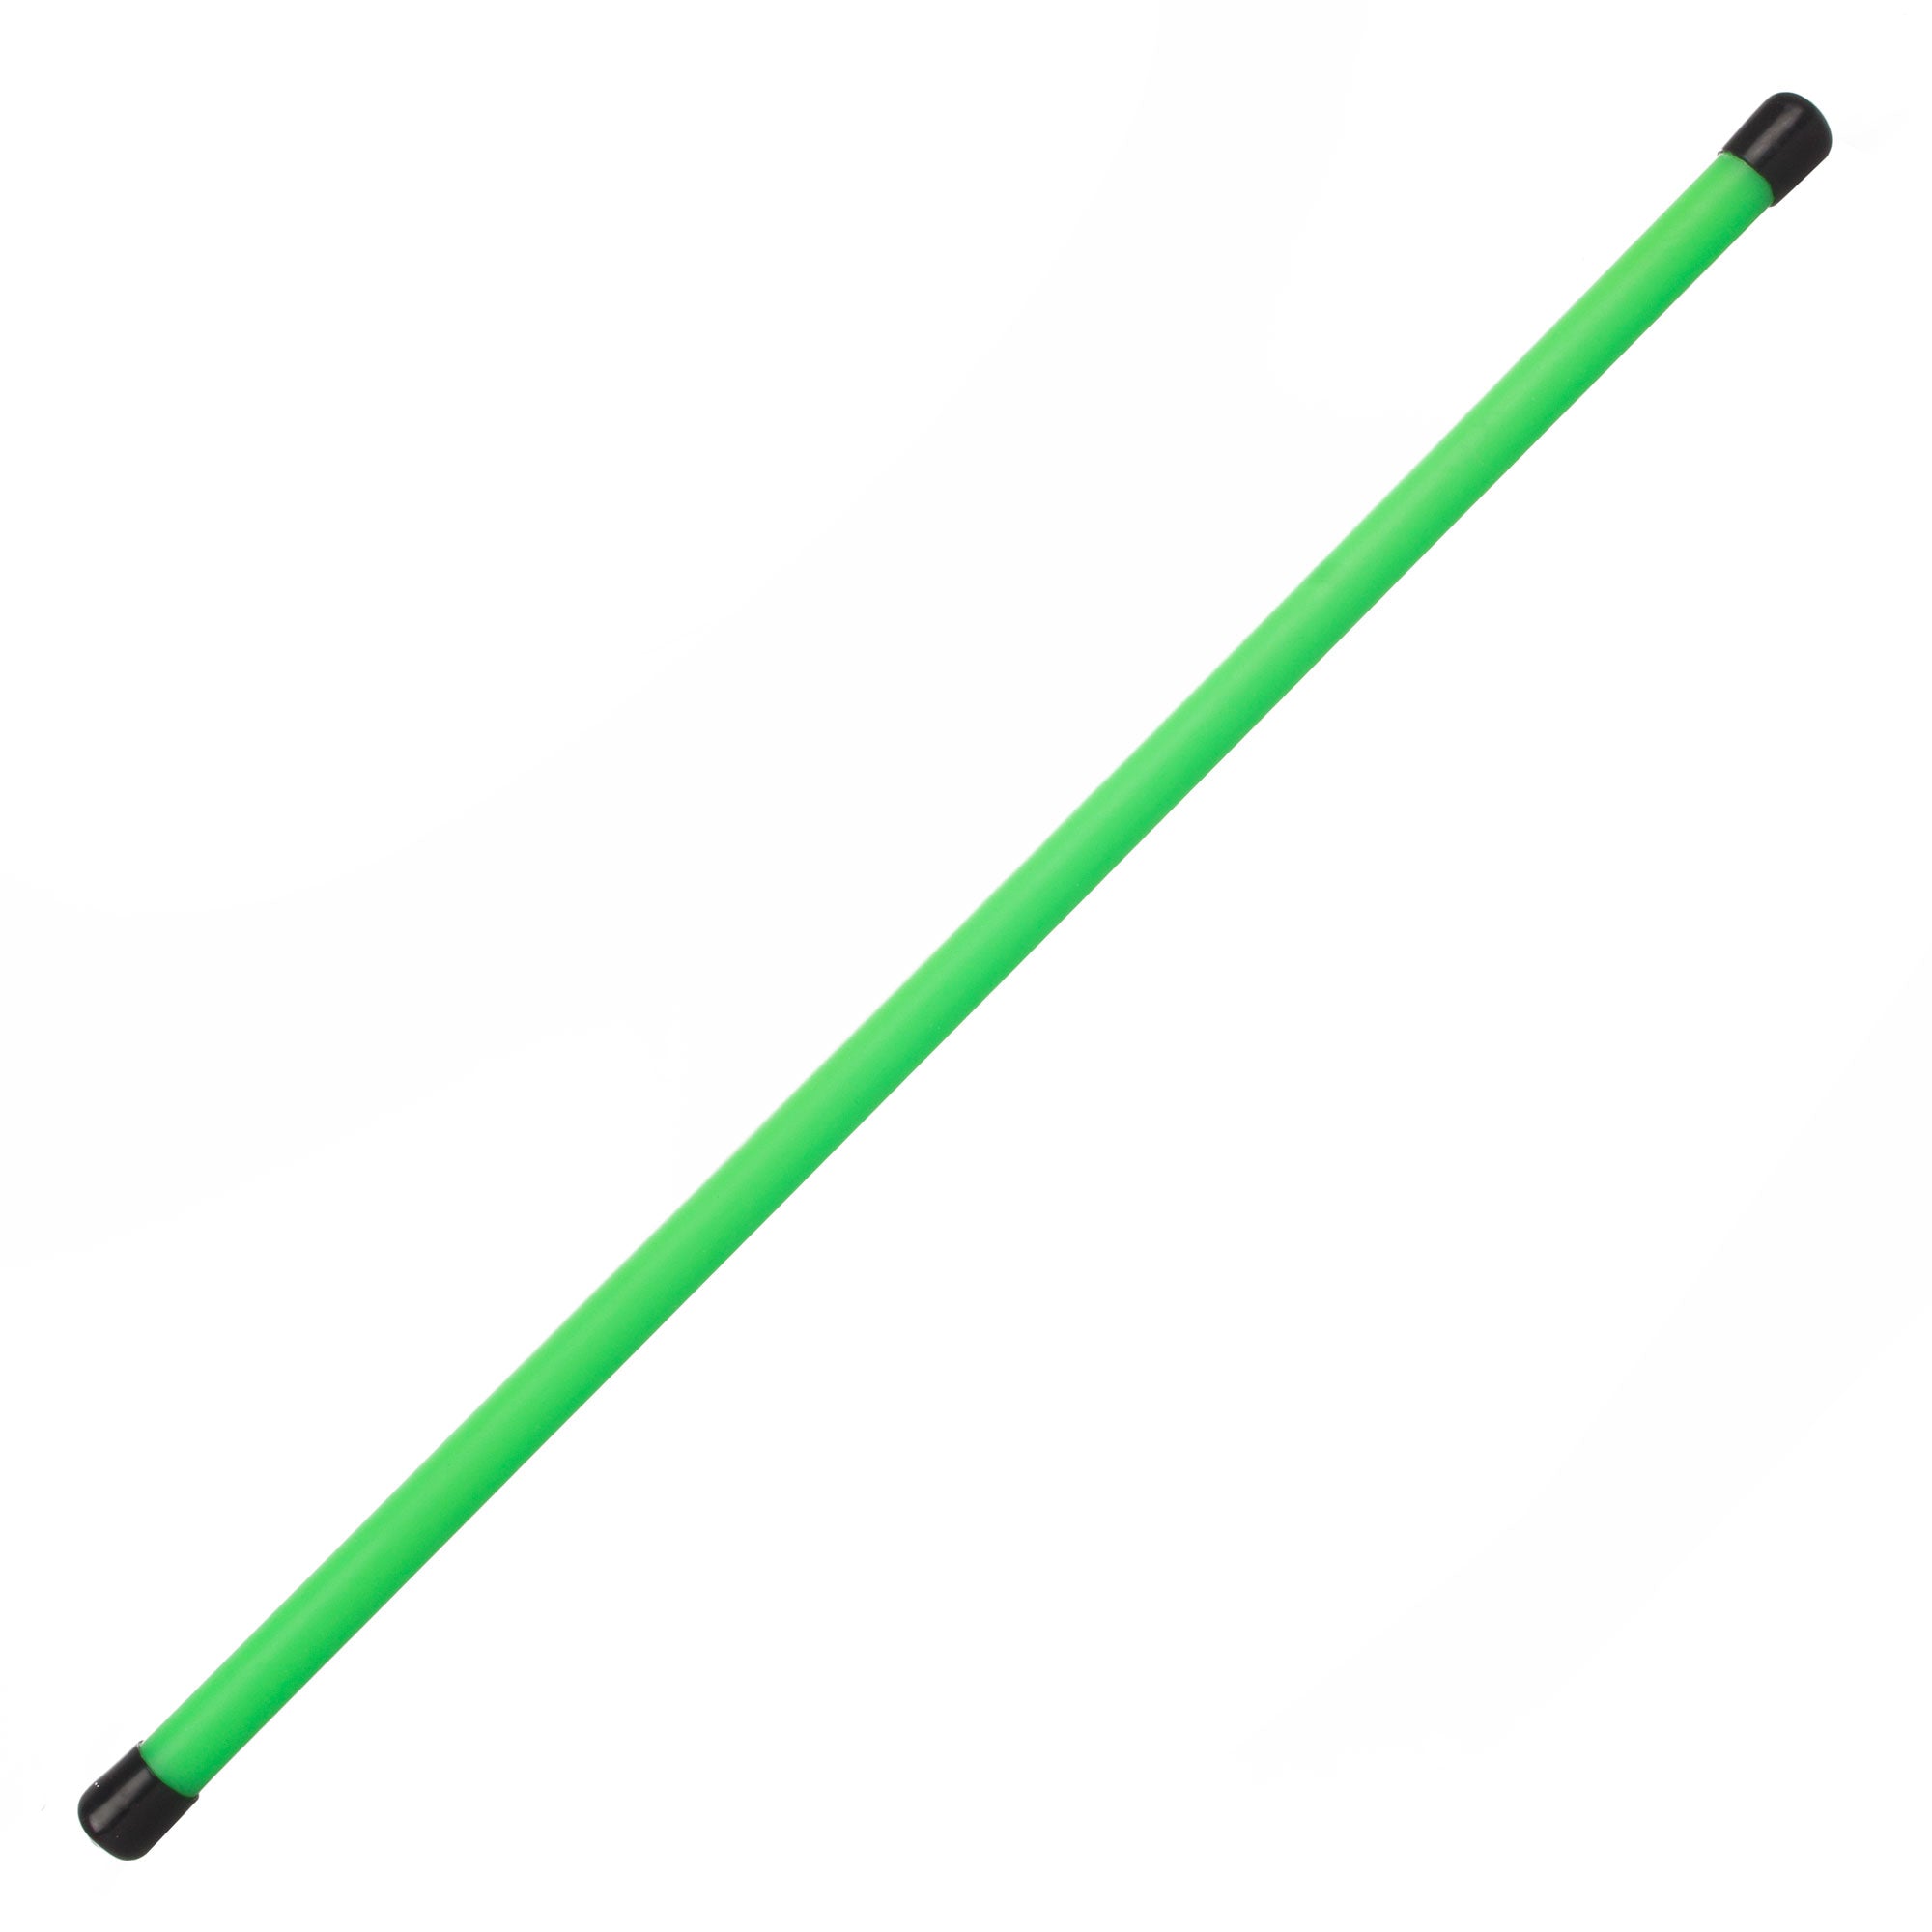 A UV green devilstick handstick with black caps on each end